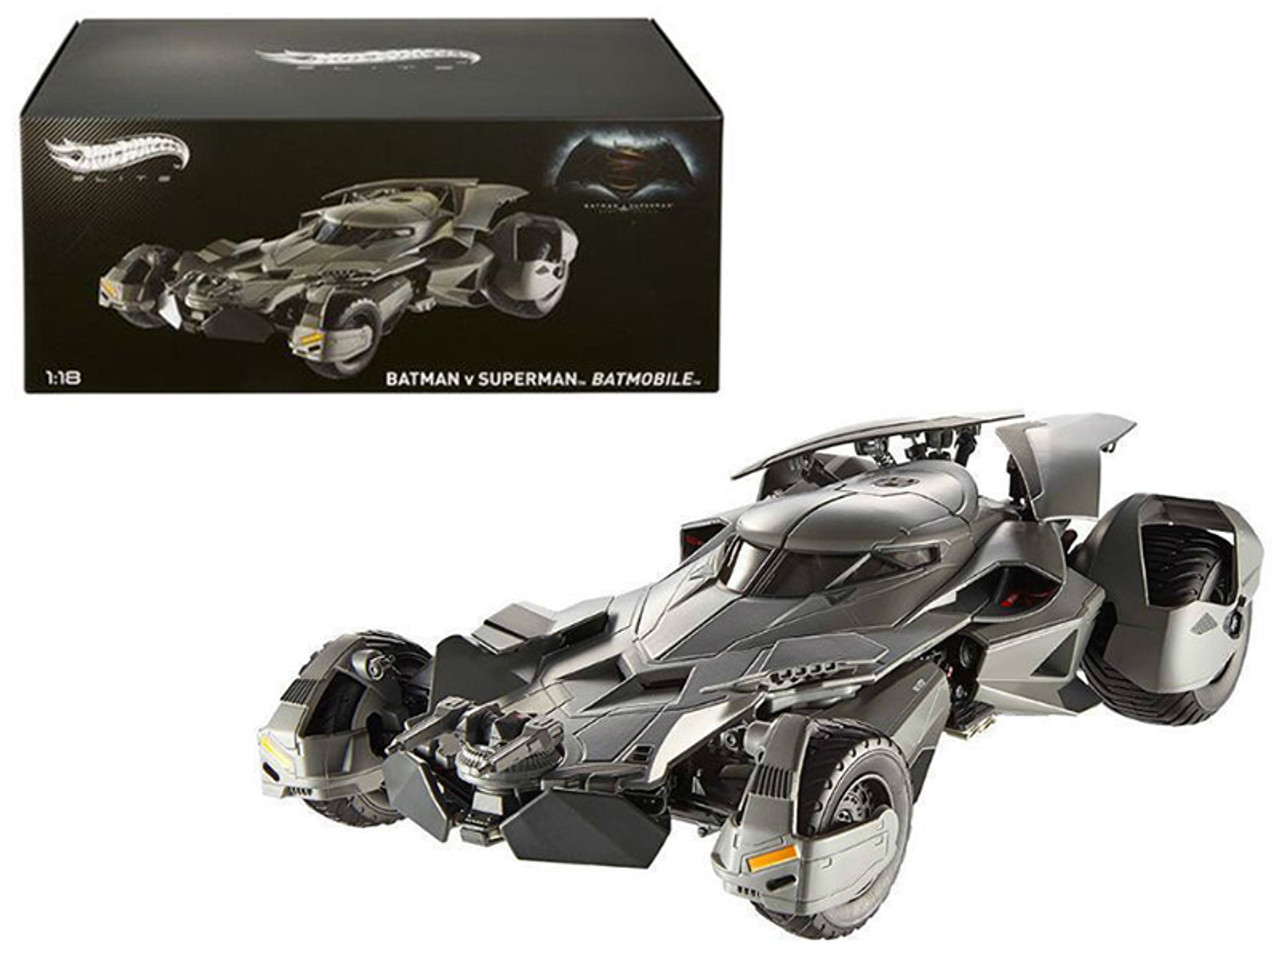 1/18 Hot Wheels Hotwheels Dawn of Justice Batmobile From "Batman vs Superman" Movie Elite Edition Diecast Car Model